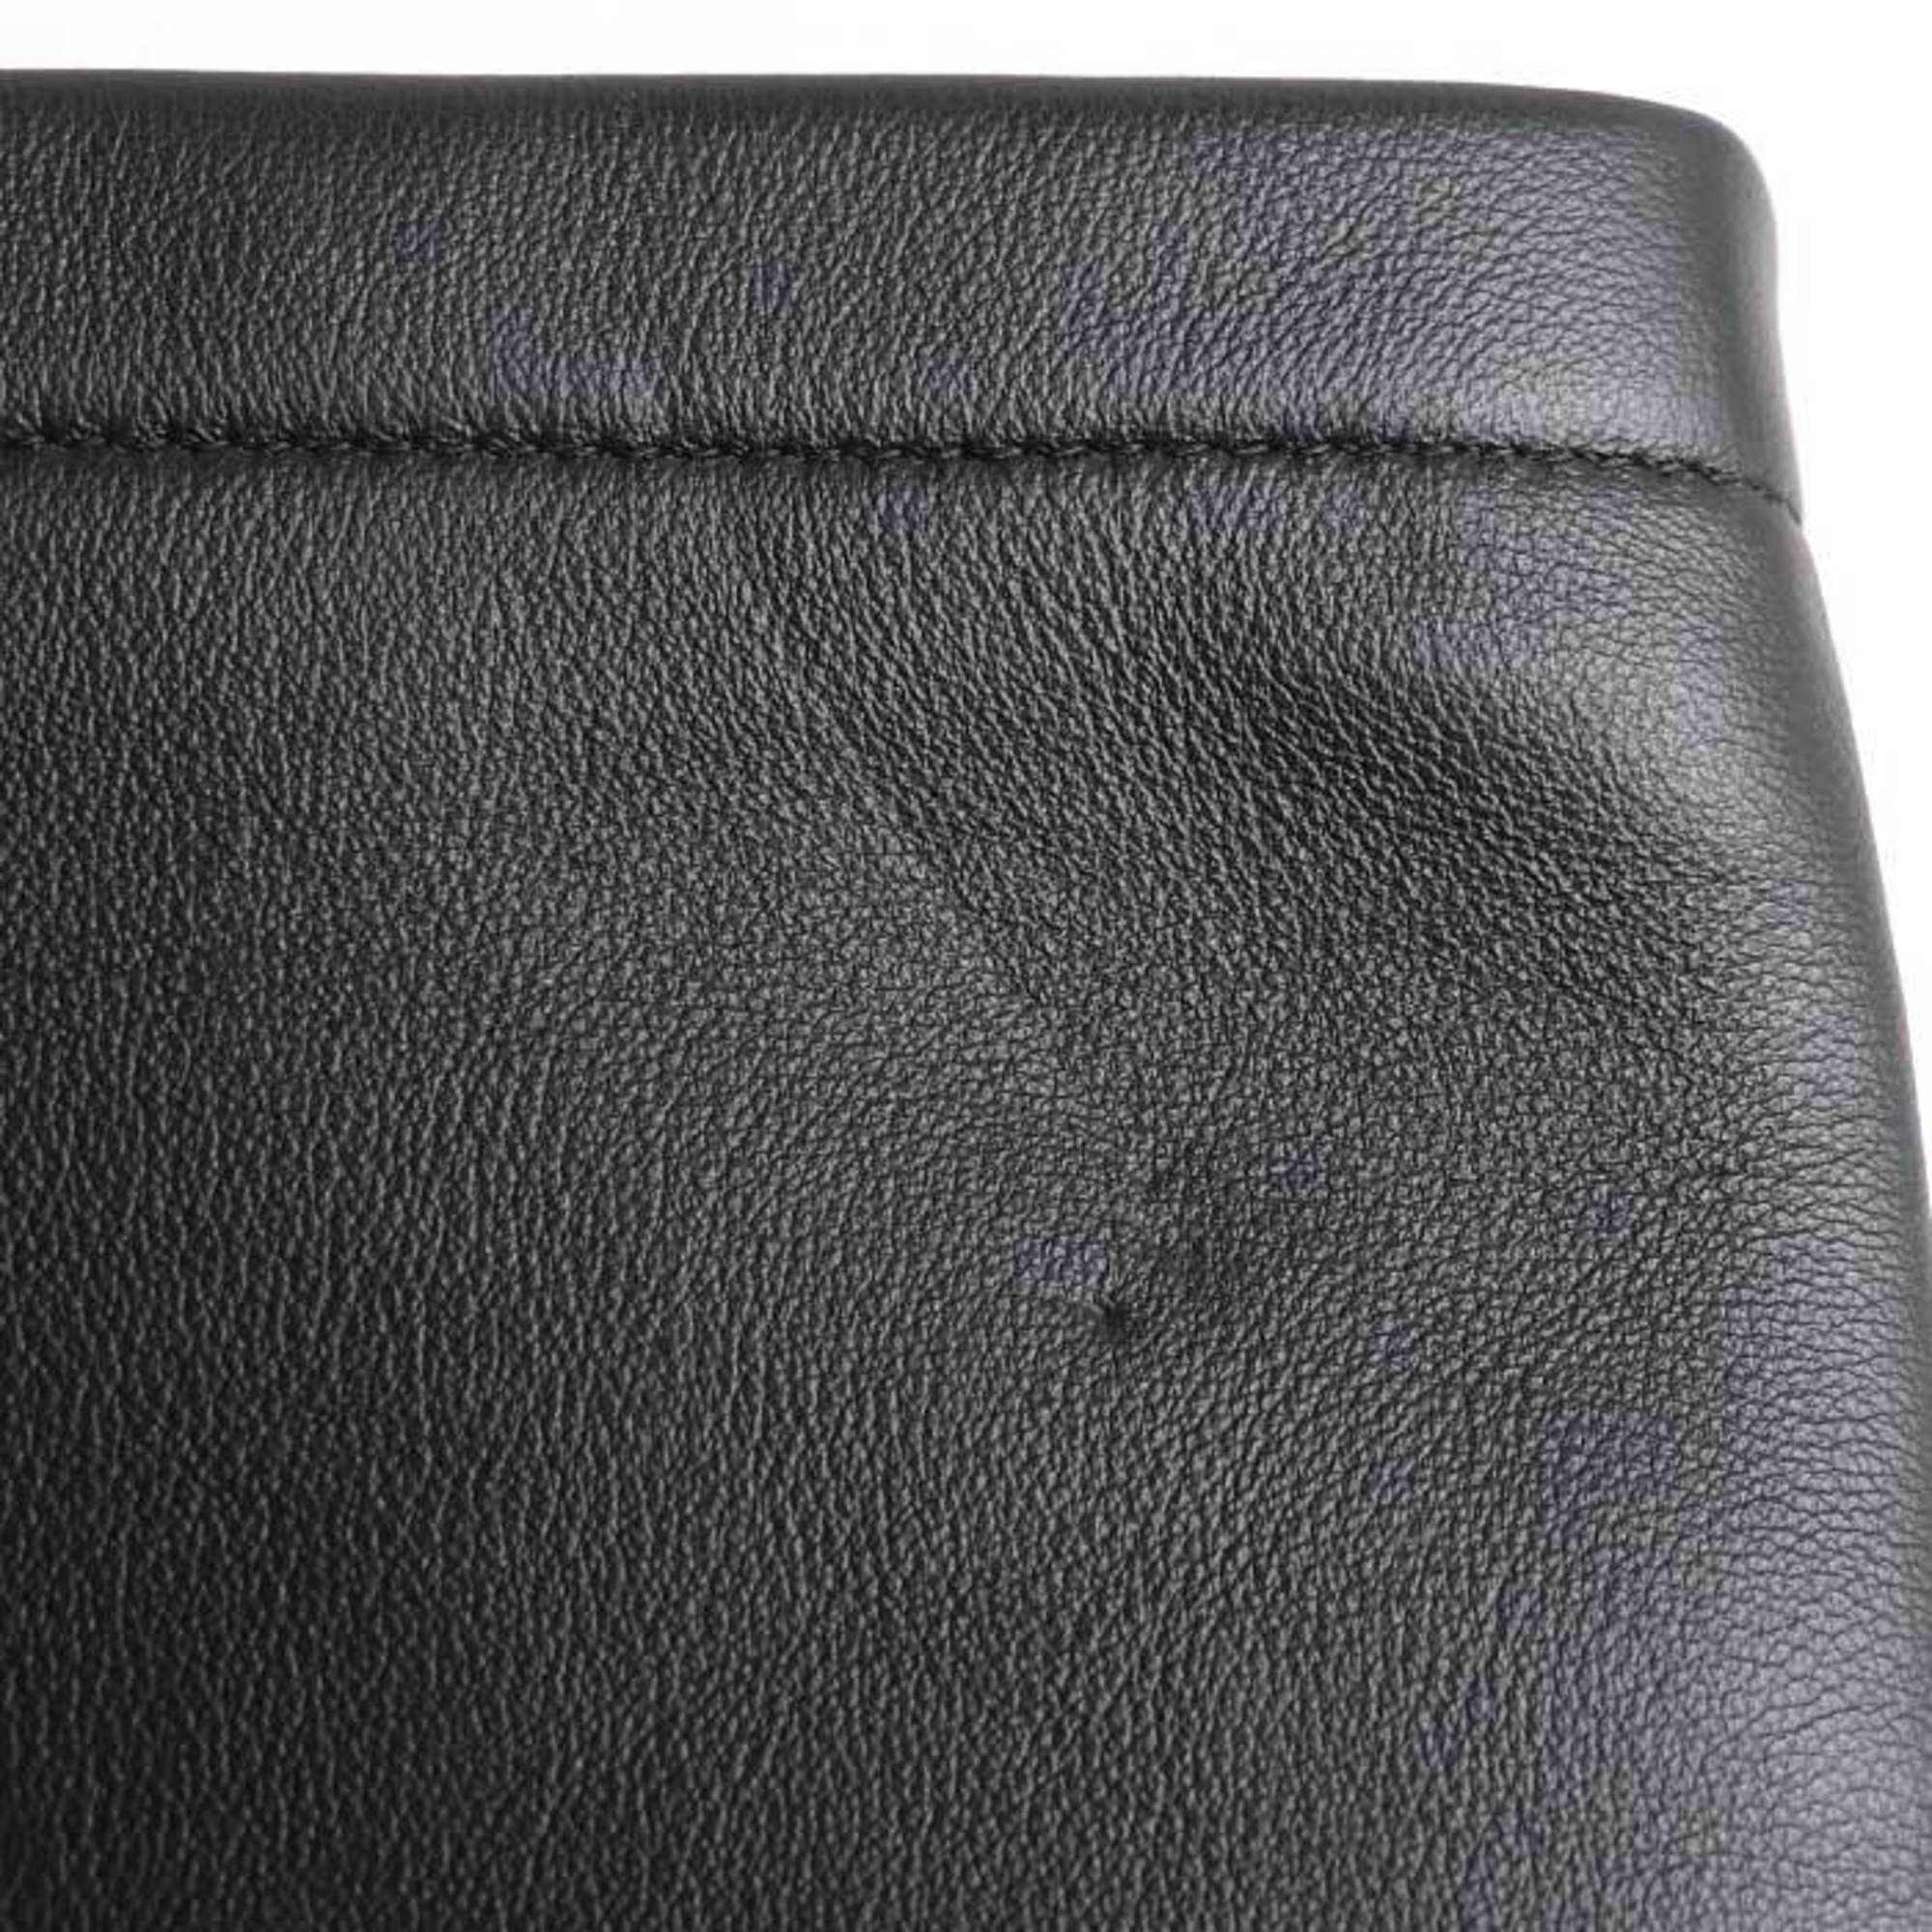 Christian Dior Striped Pouch Clutch Bag Black S5543CGSB 900U Men's